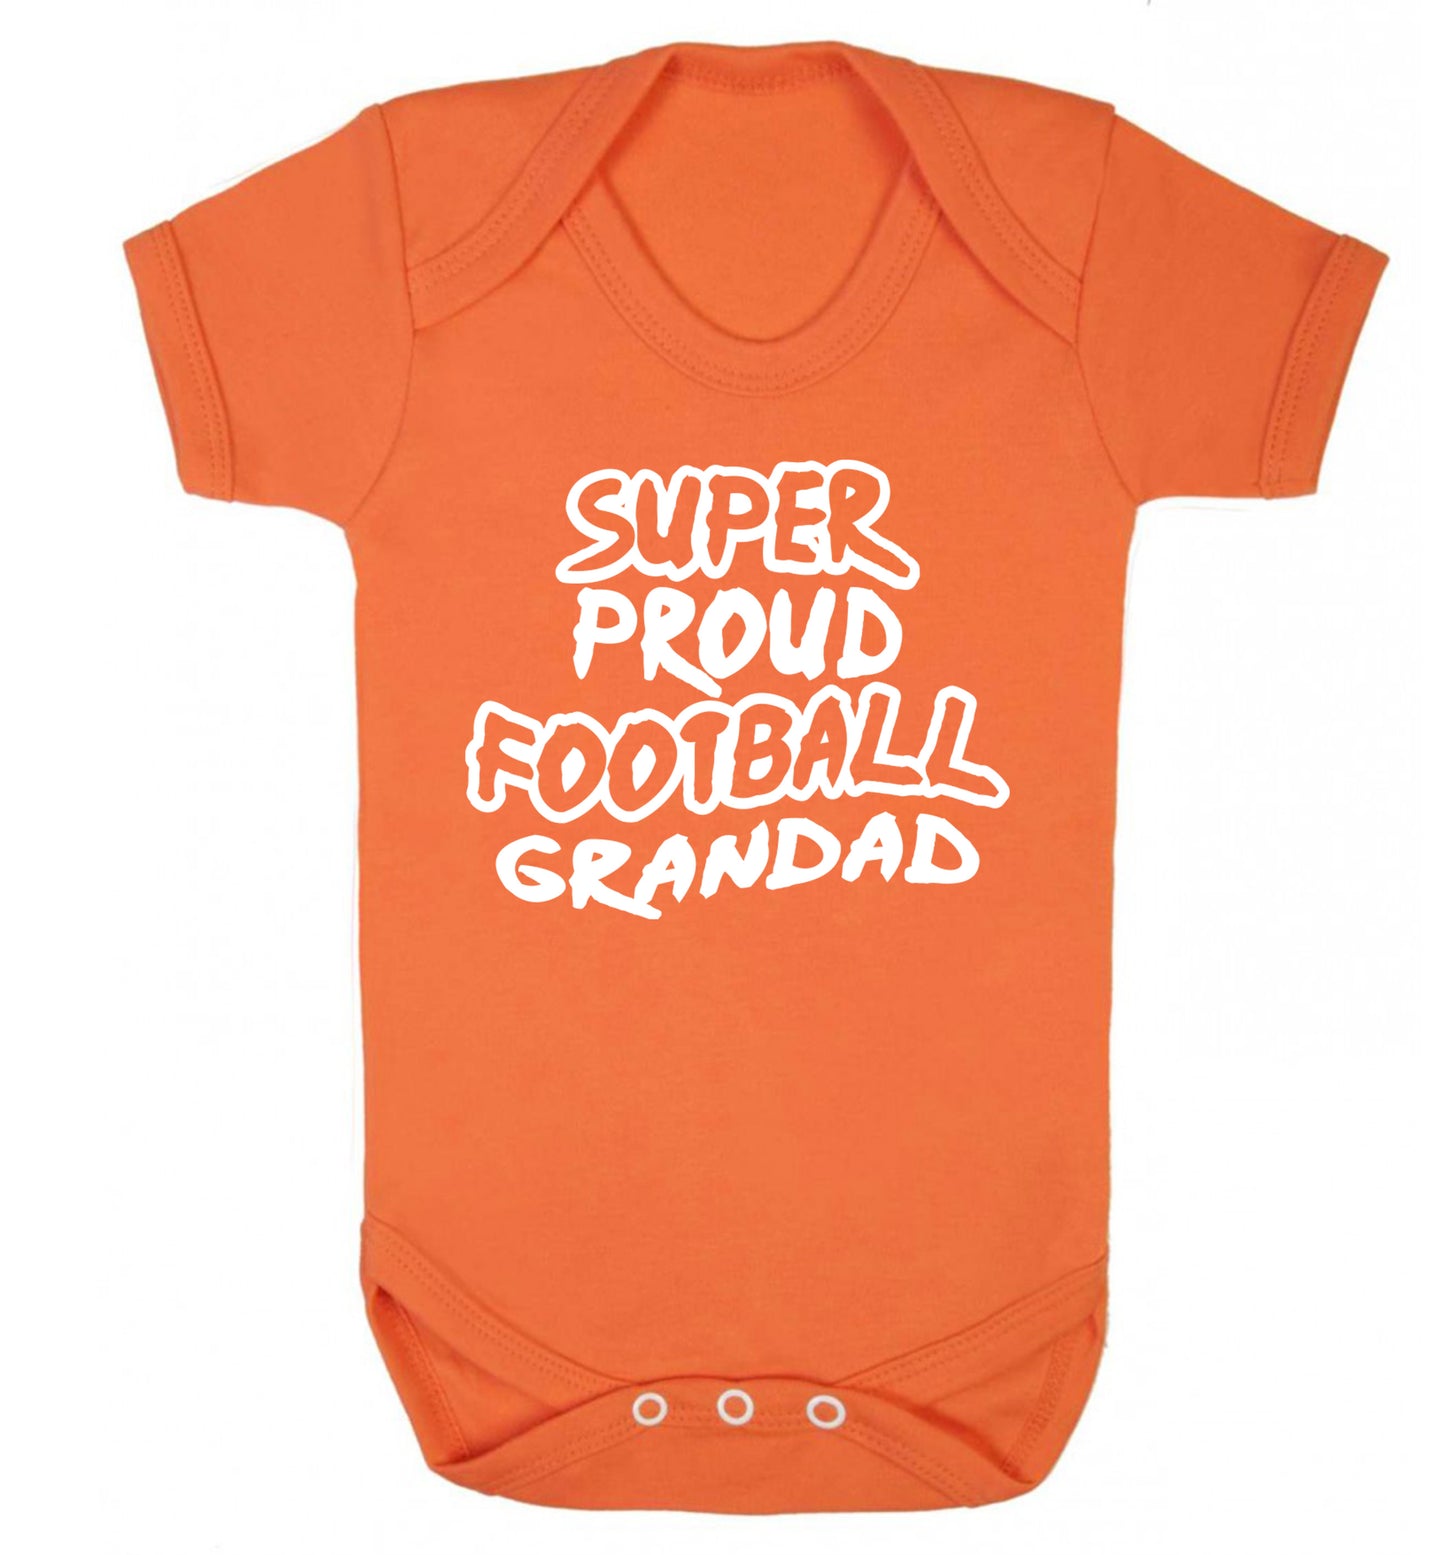 Super proud football grandad Baby Vest orange 18-24 months